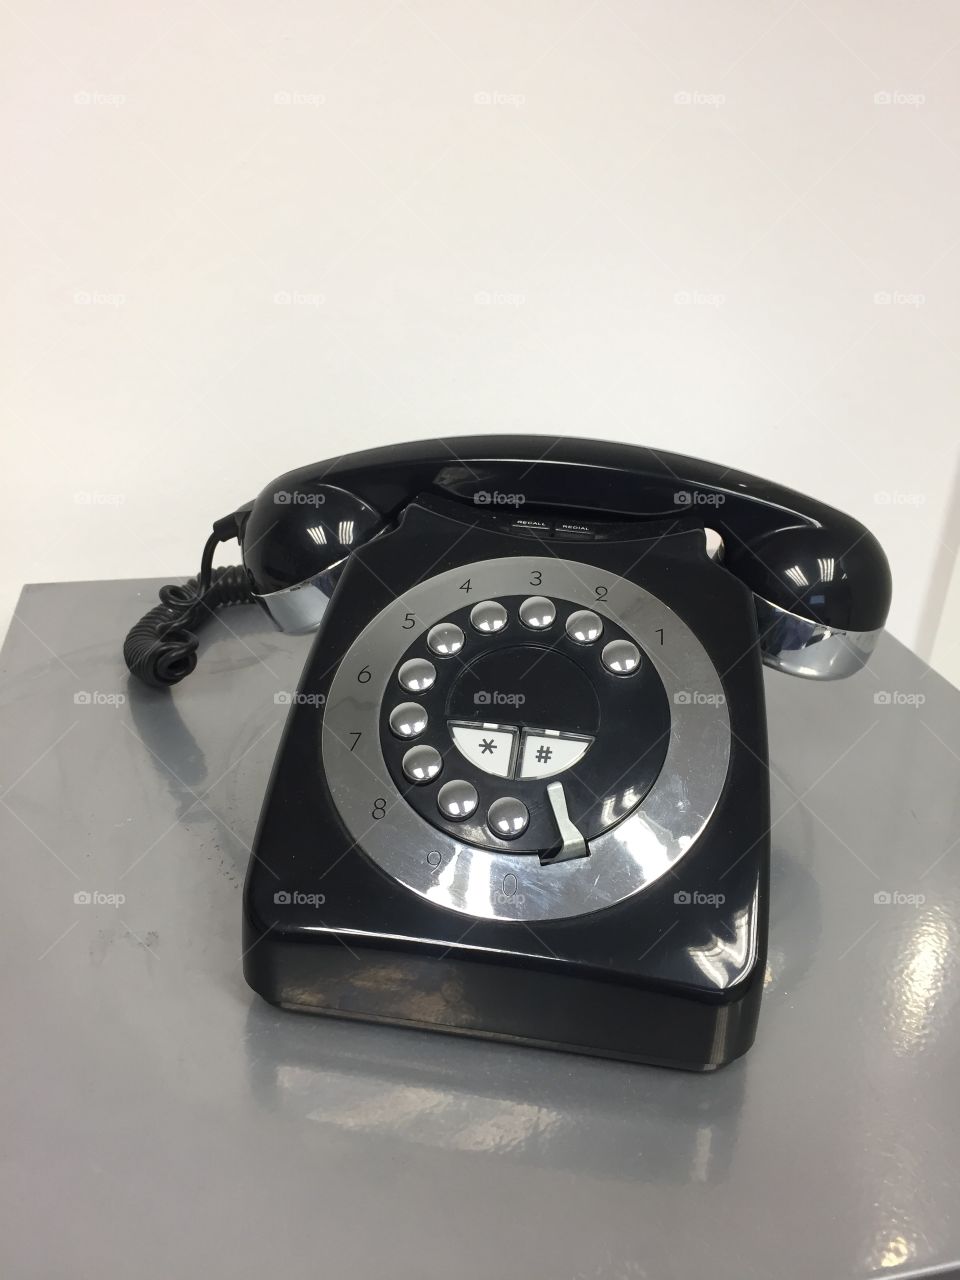 Old school phone.